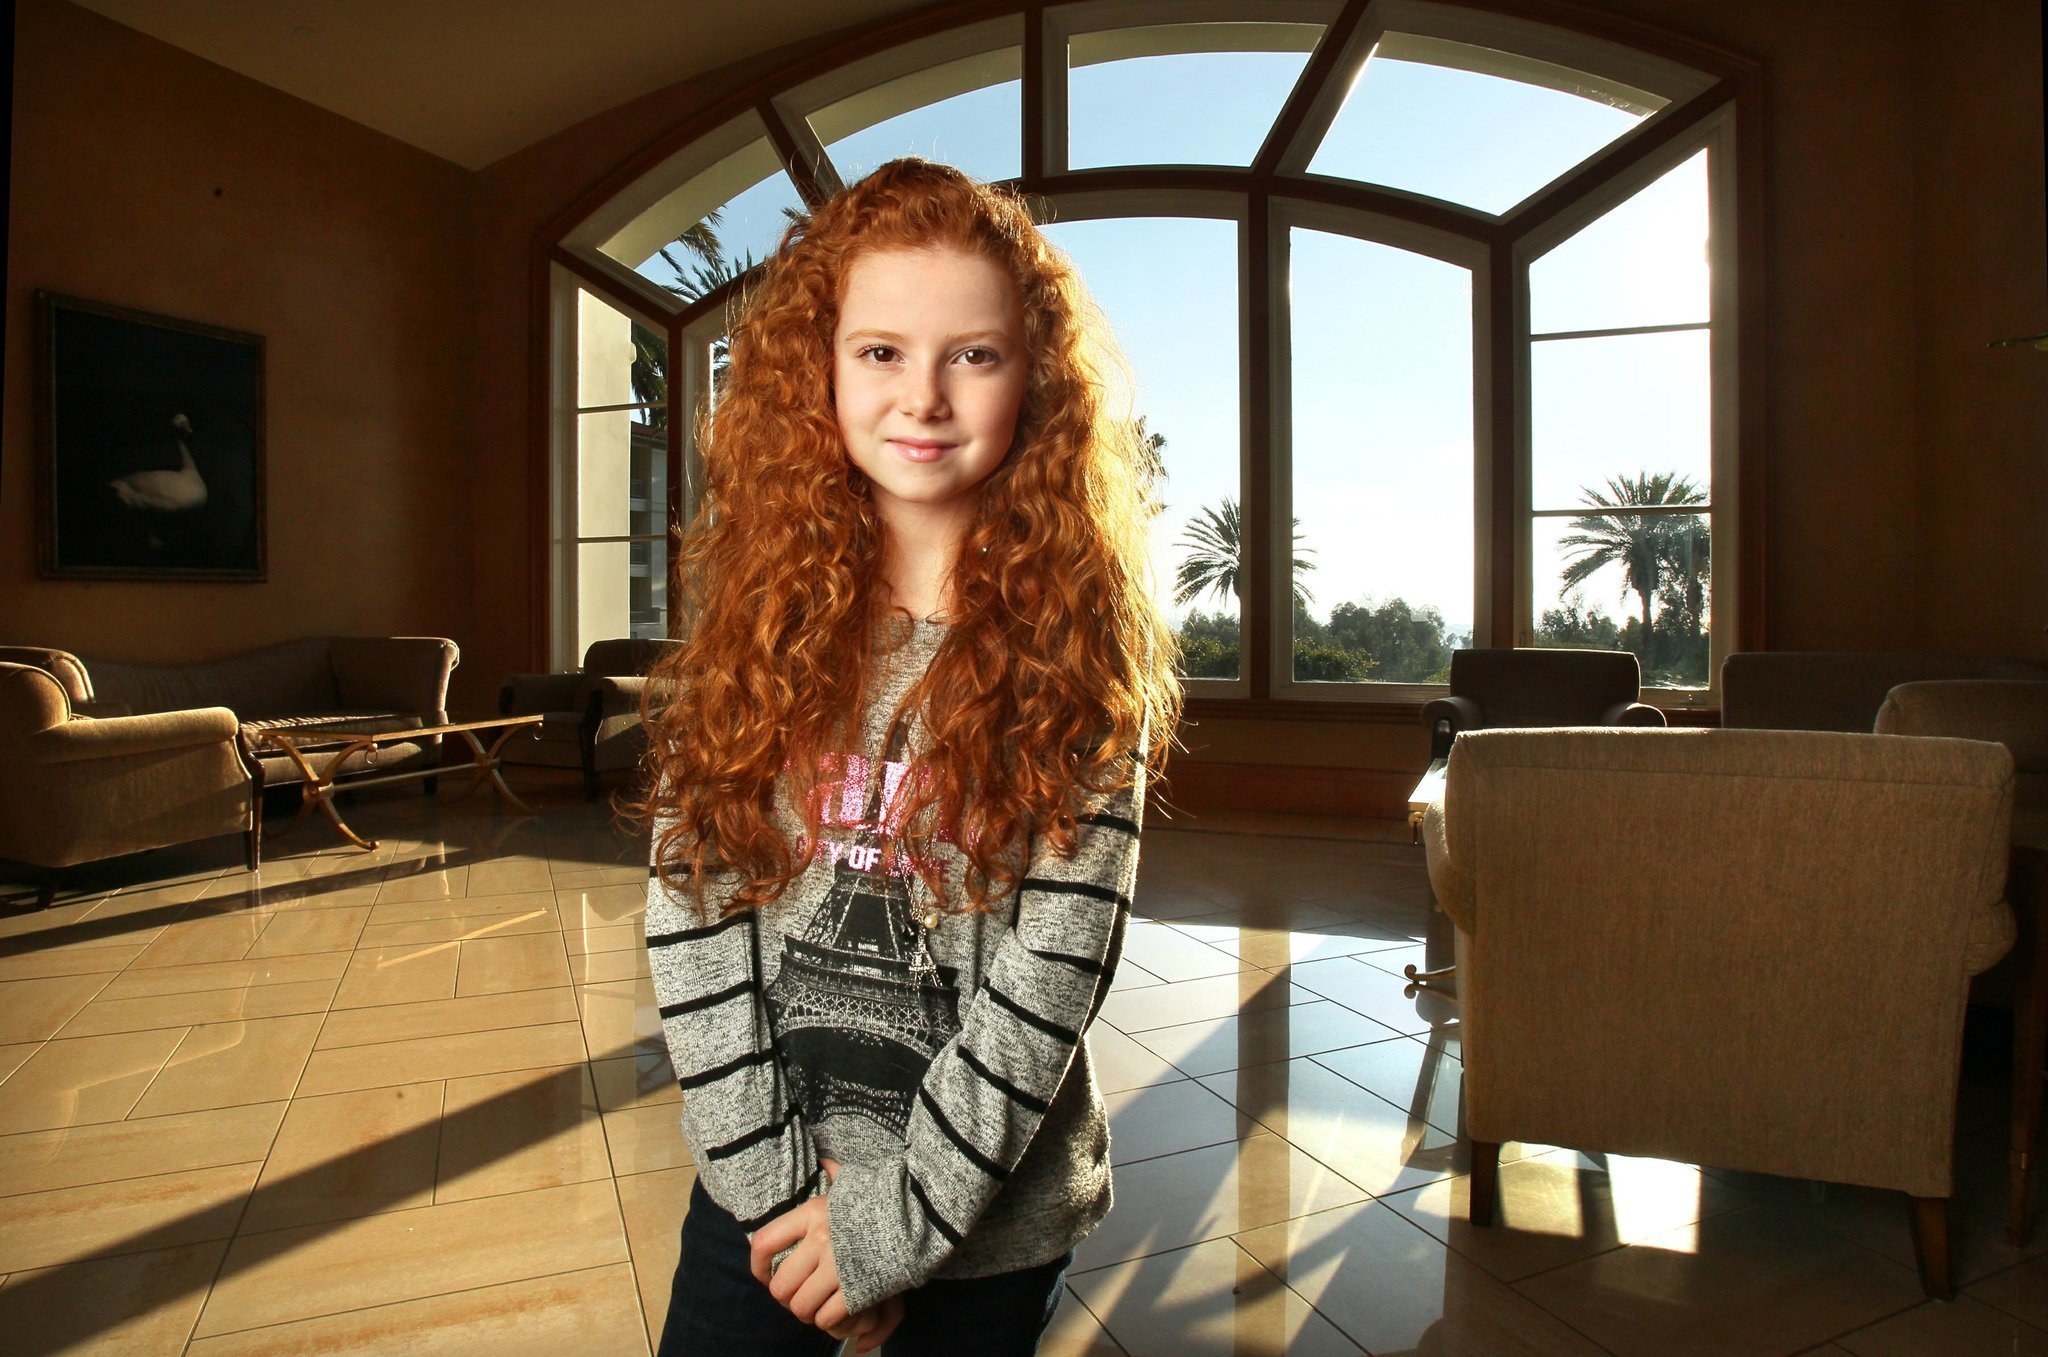 Disney star has normal life in Carlsbad - The San Diego Union-Tribune